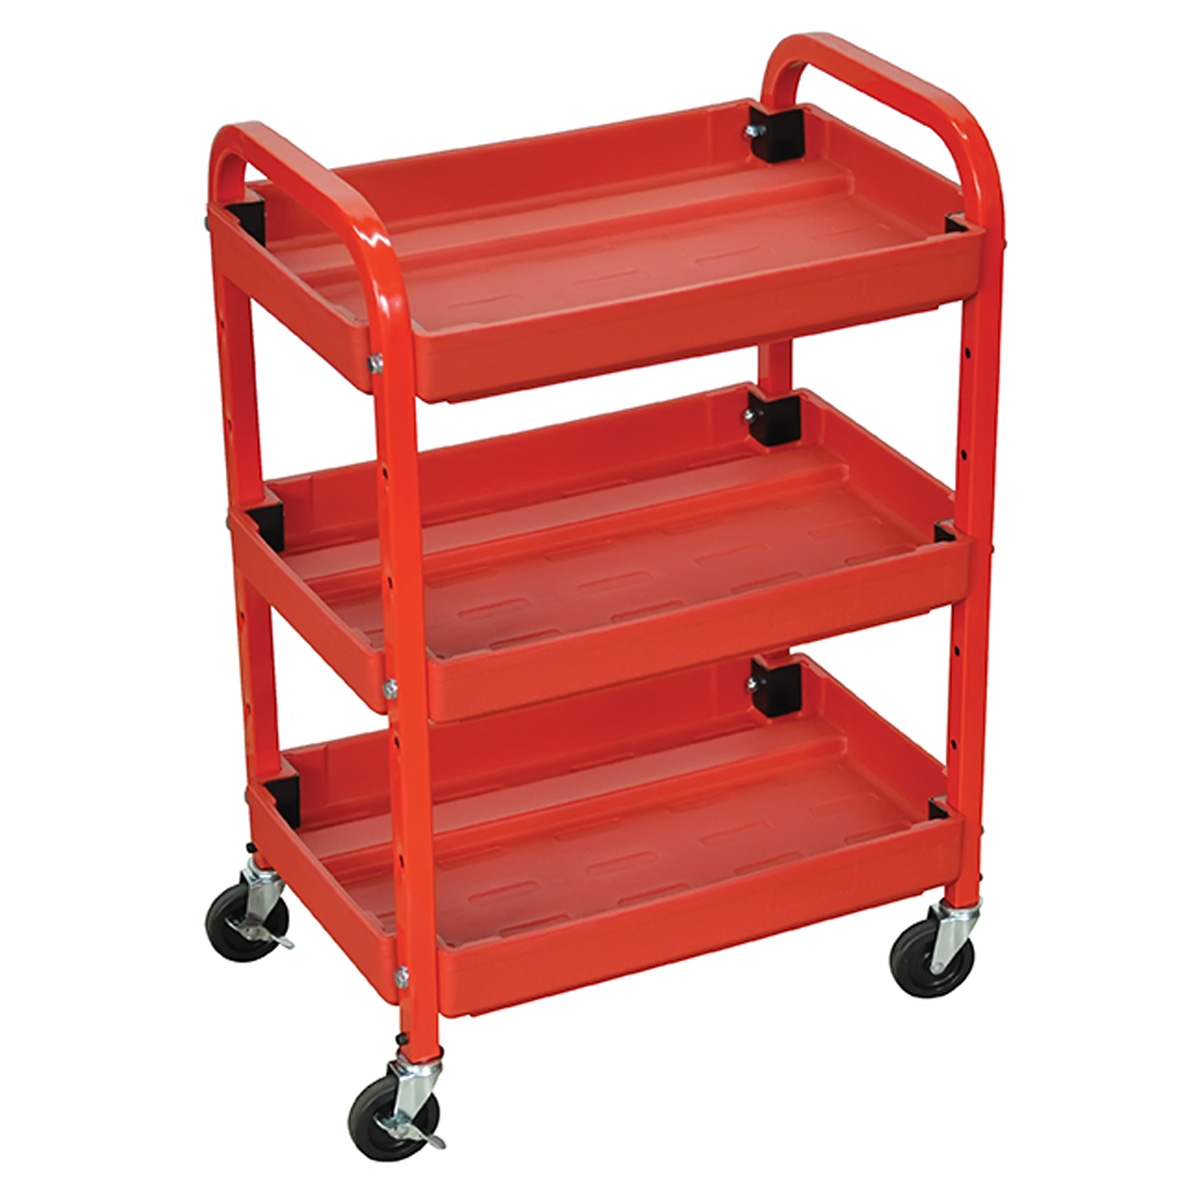 Luxor Atc332 3 Shelves Adjustable Storage Utility Cart - Red